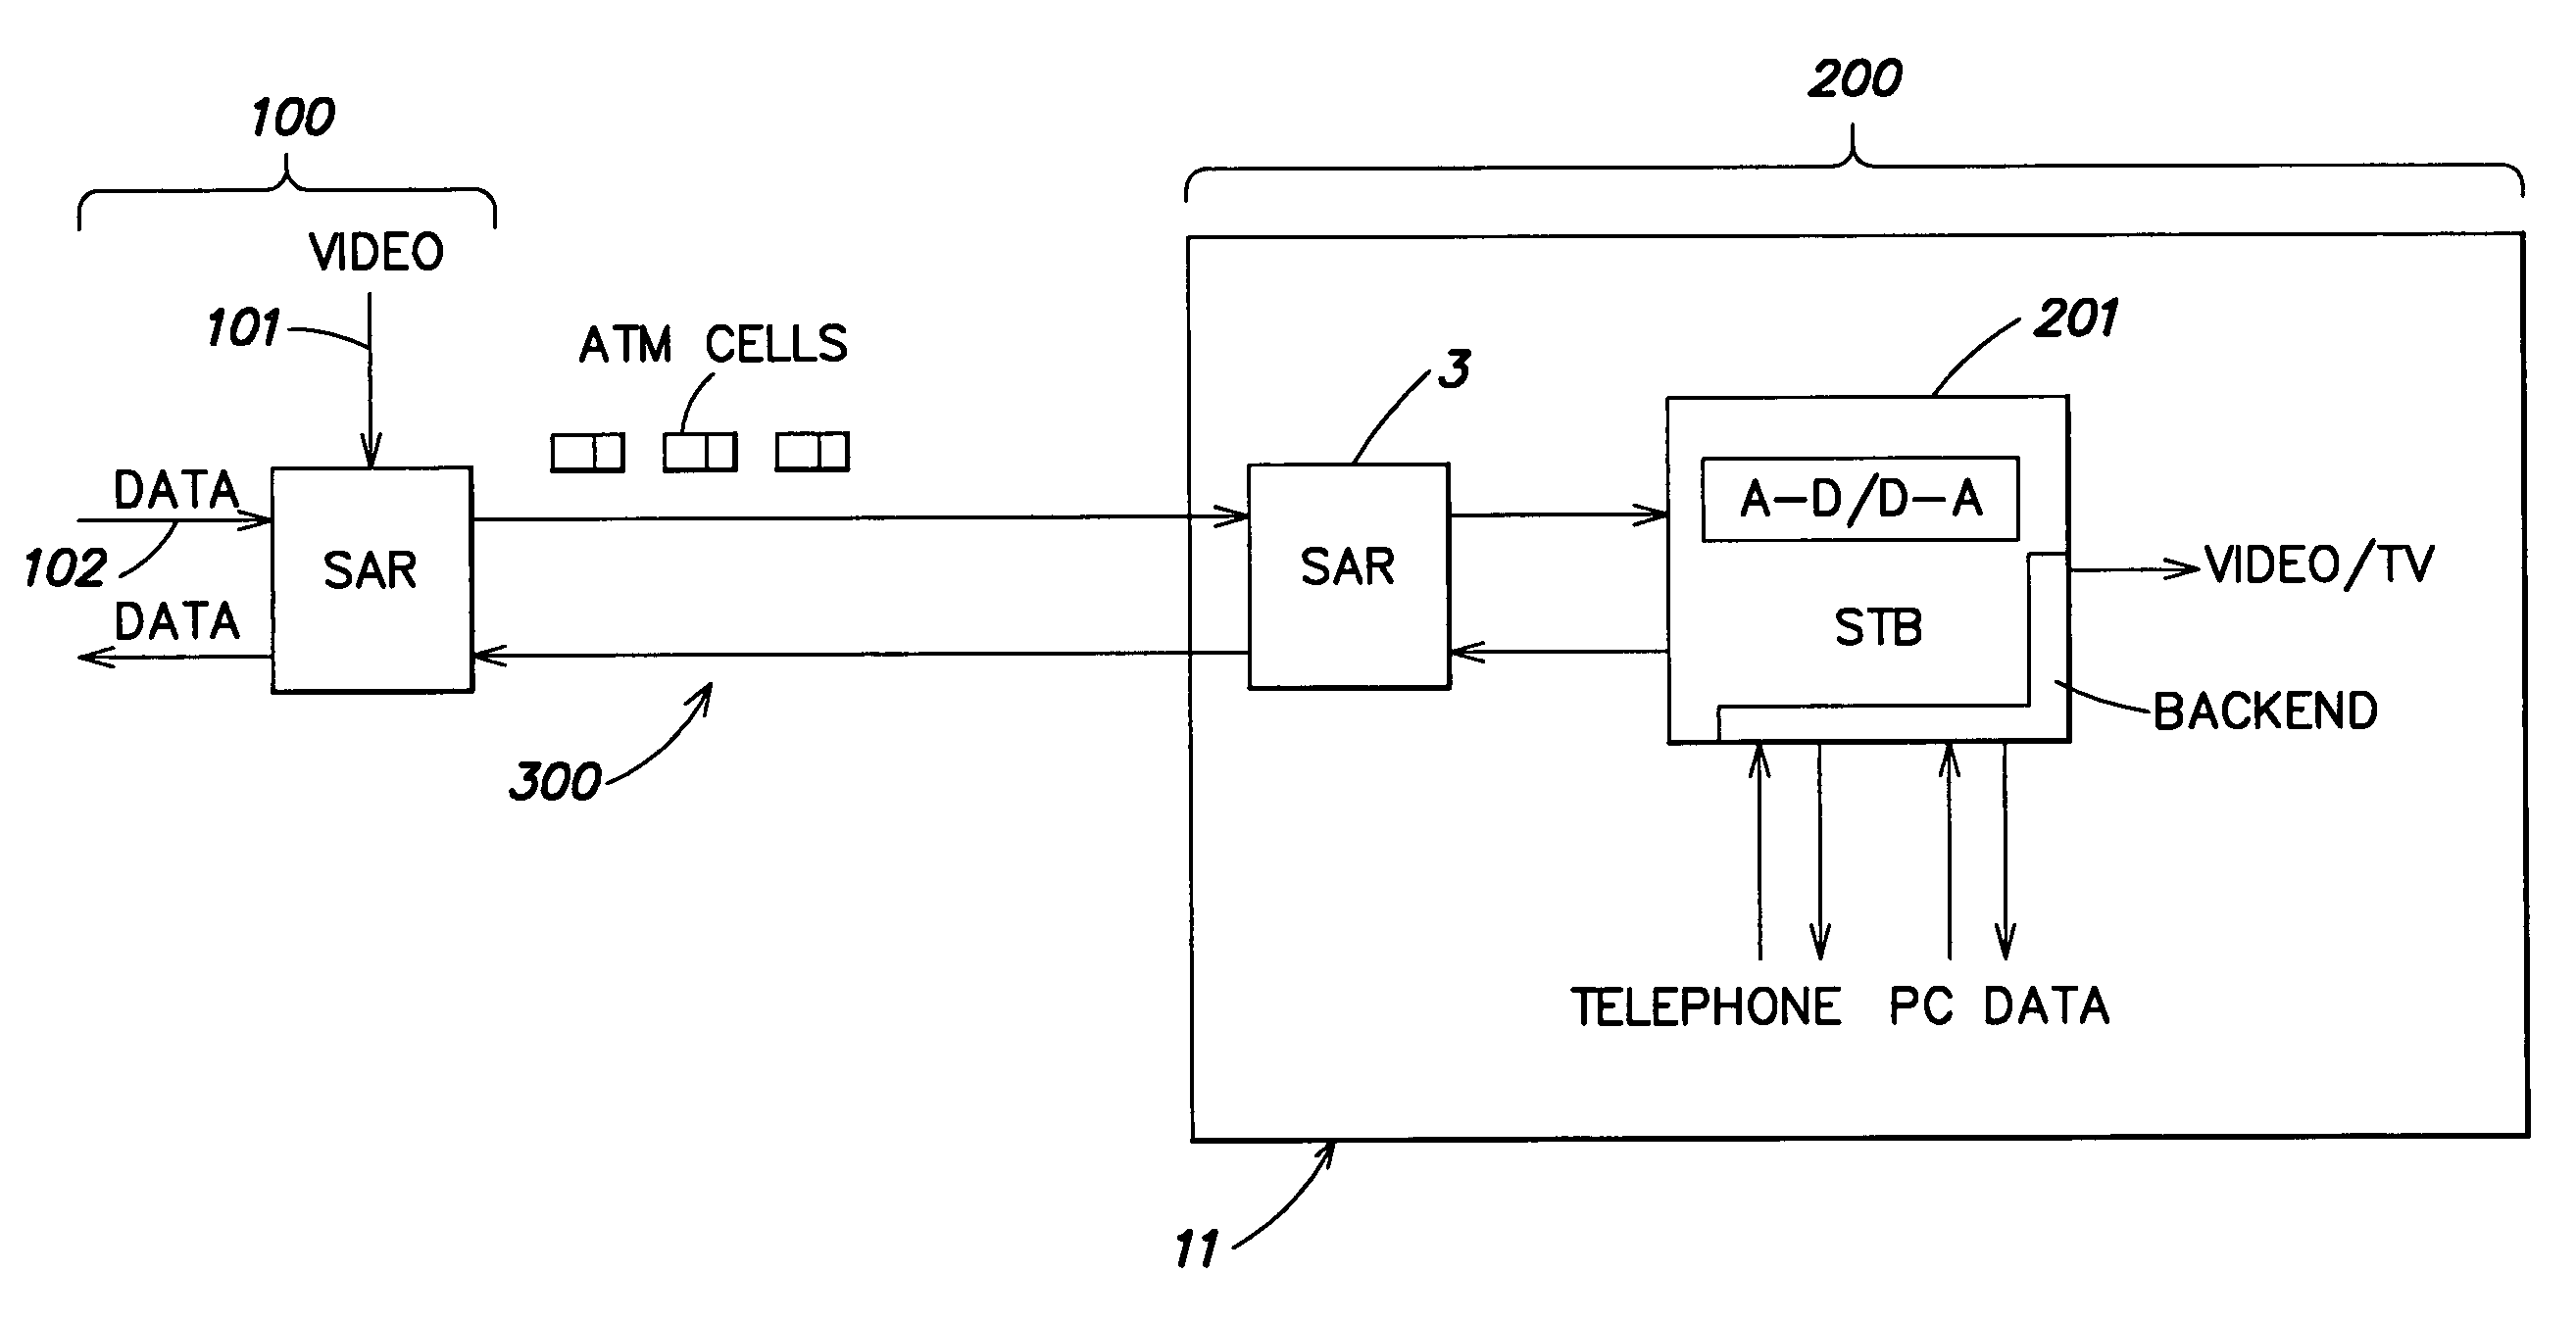 Data transmission apparatus for transmitting ATM data streams